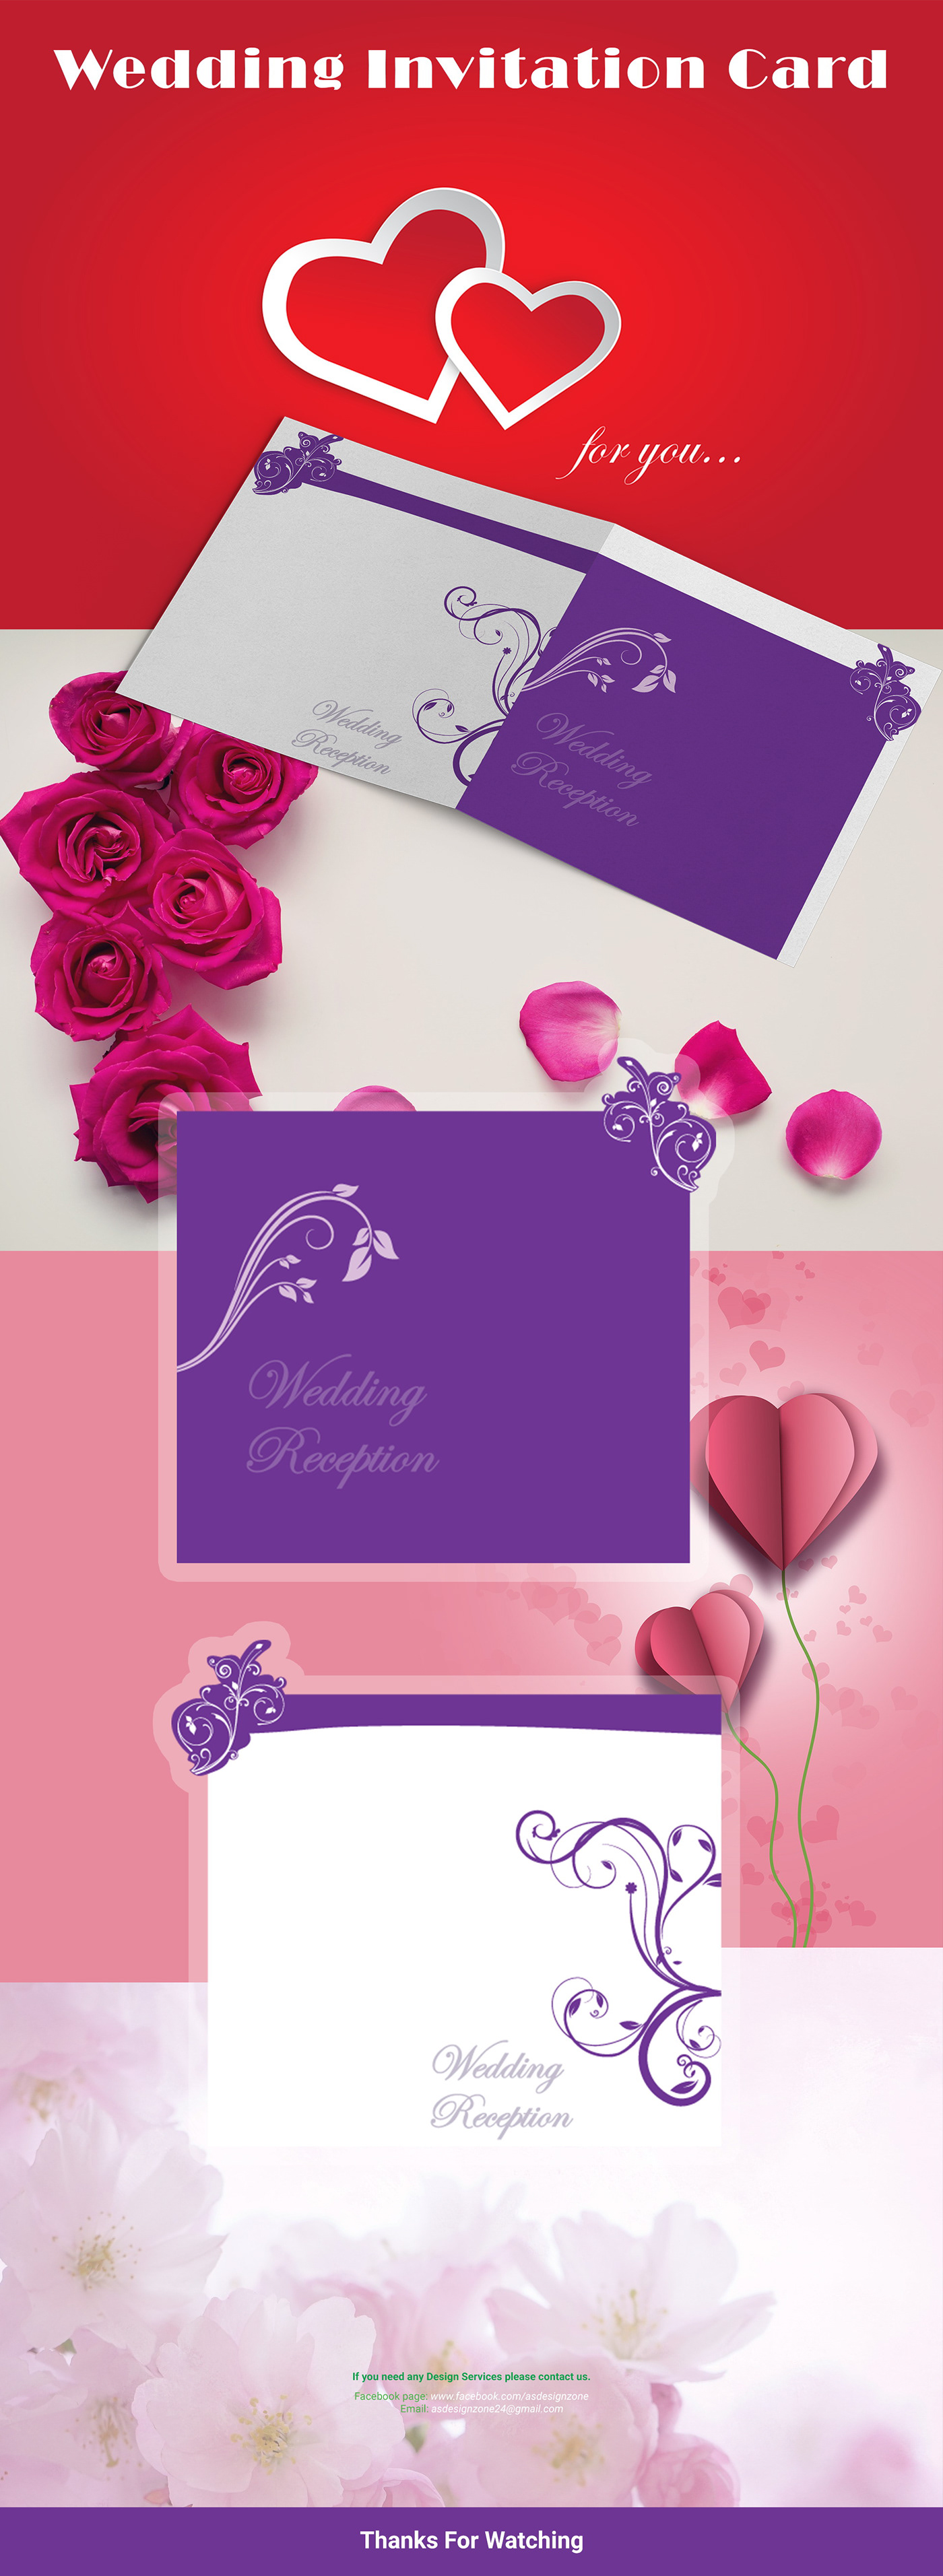 wedding Invitation card design free mock up print invit bridal marriage invite card